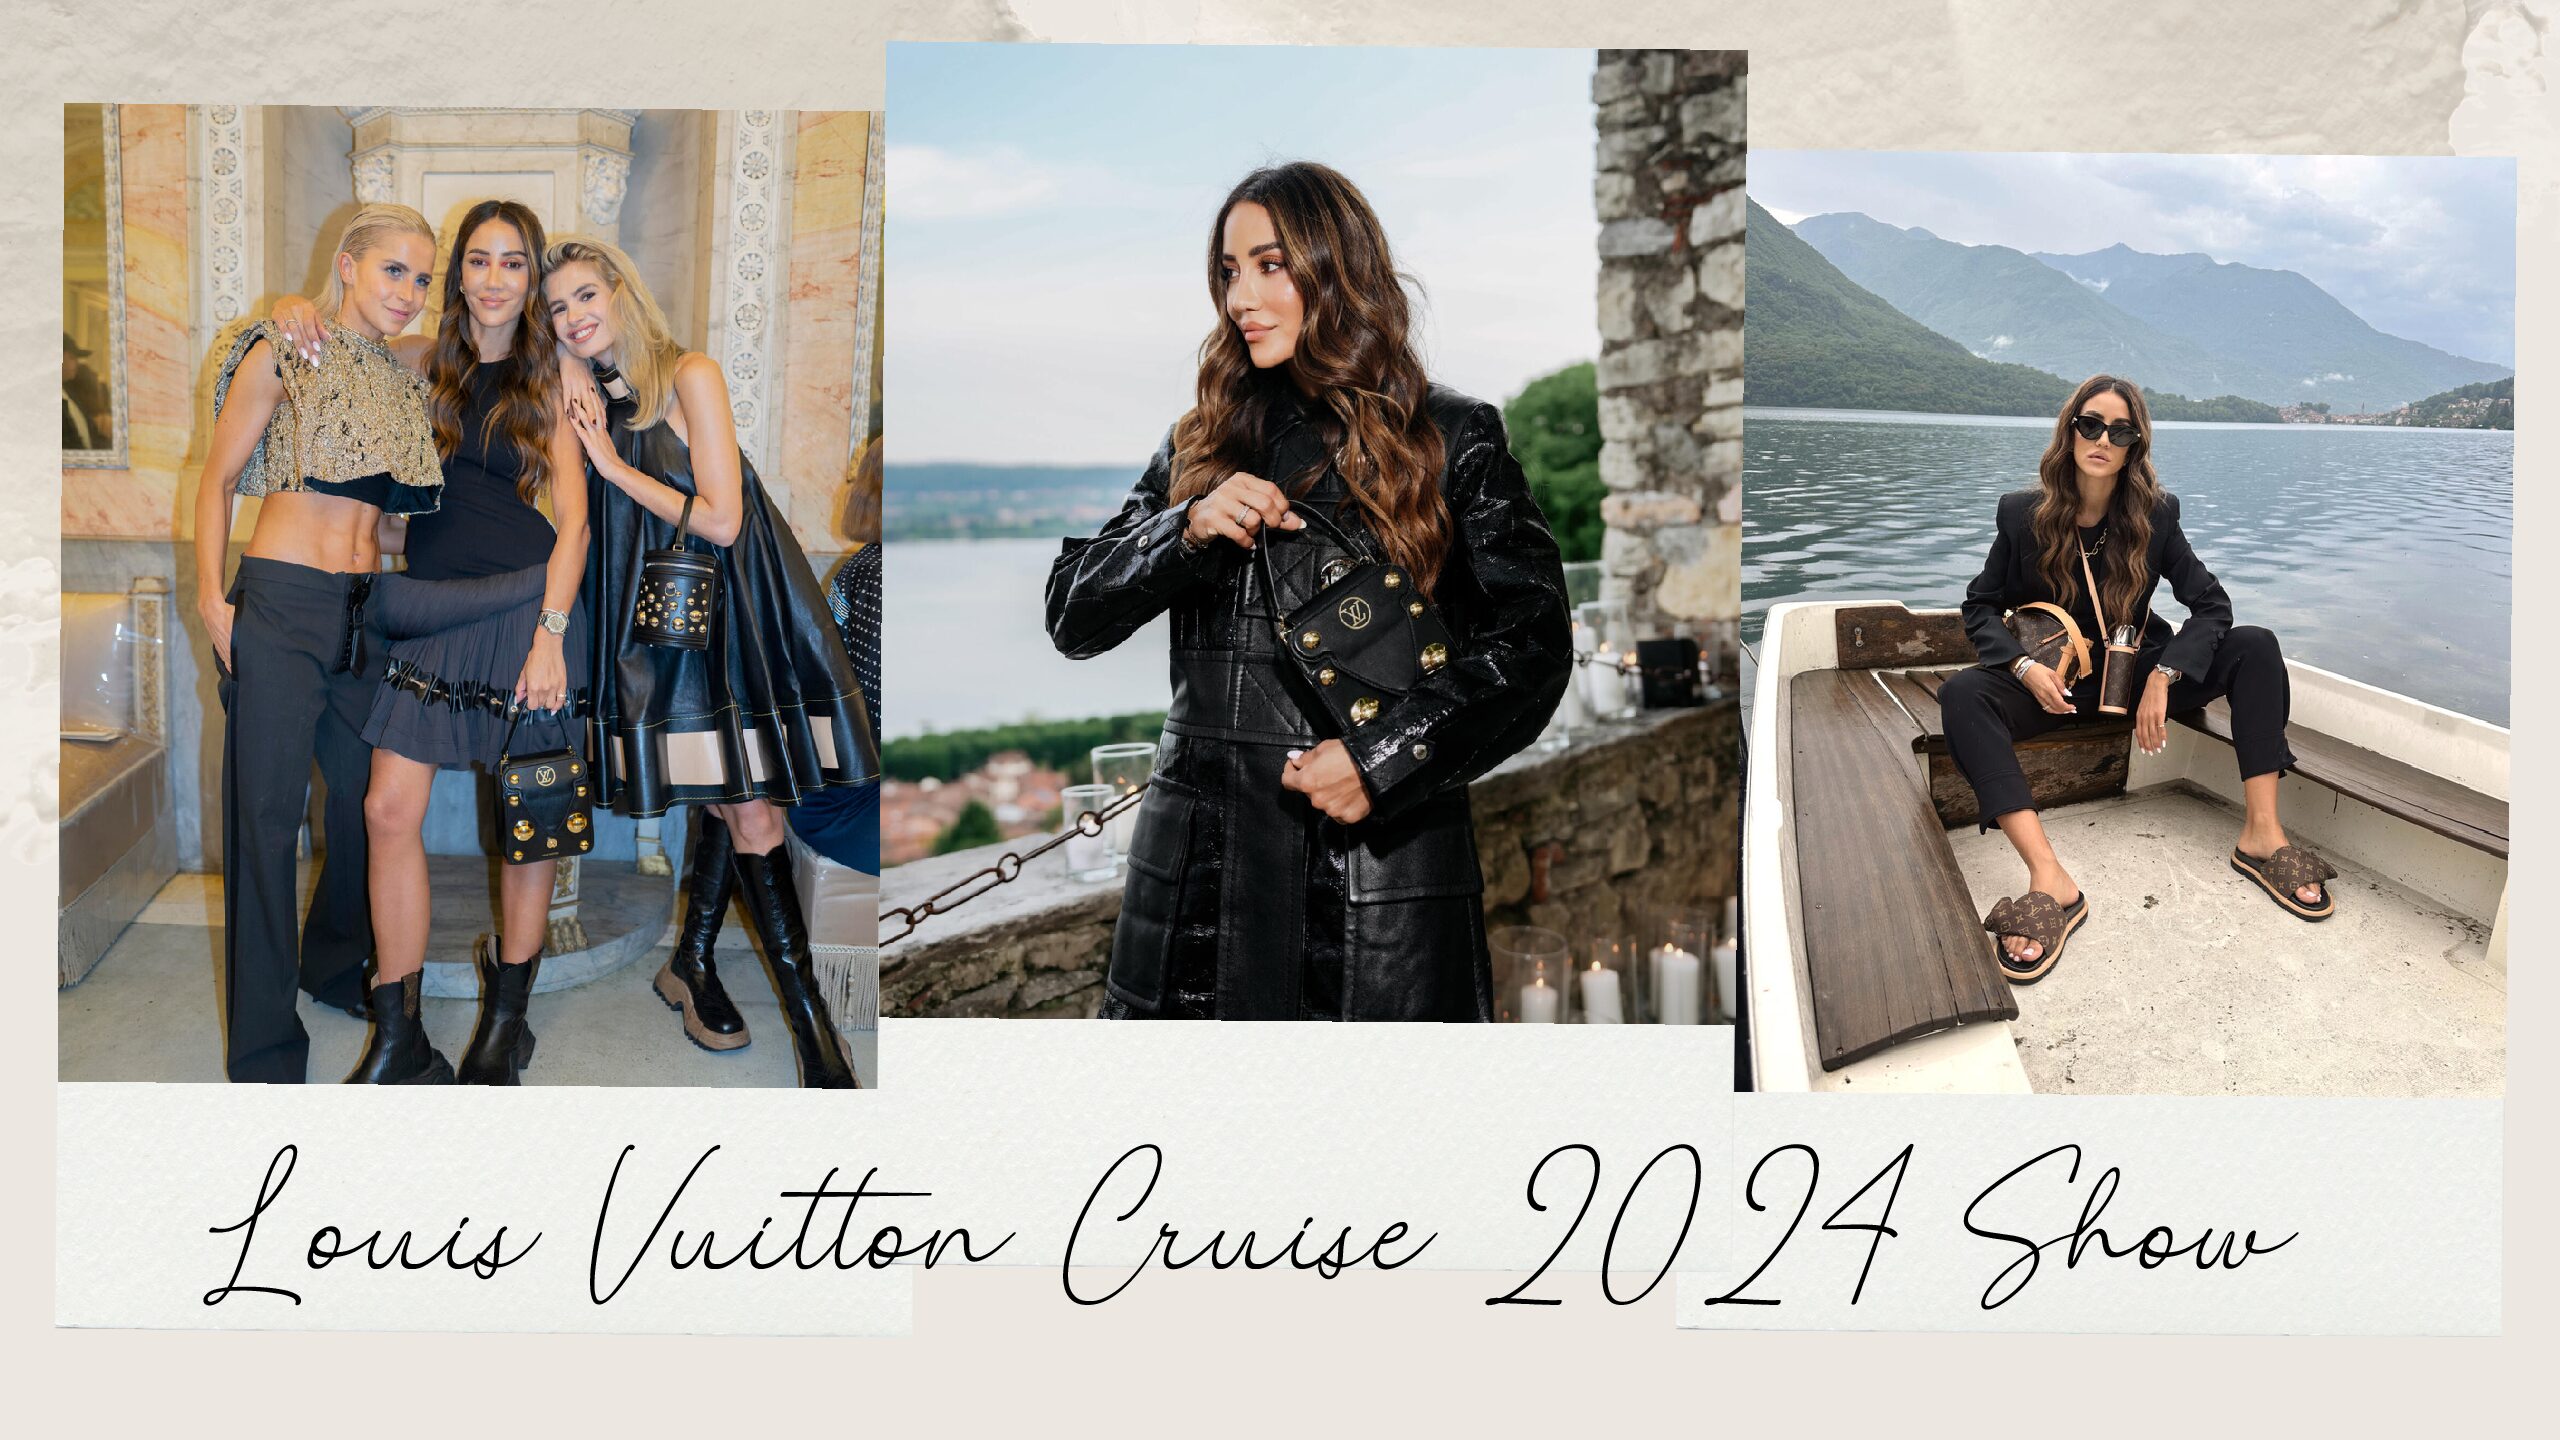 Louis Vuitton Cruise 2024 Show at Isola Bella - Glam & Glitter